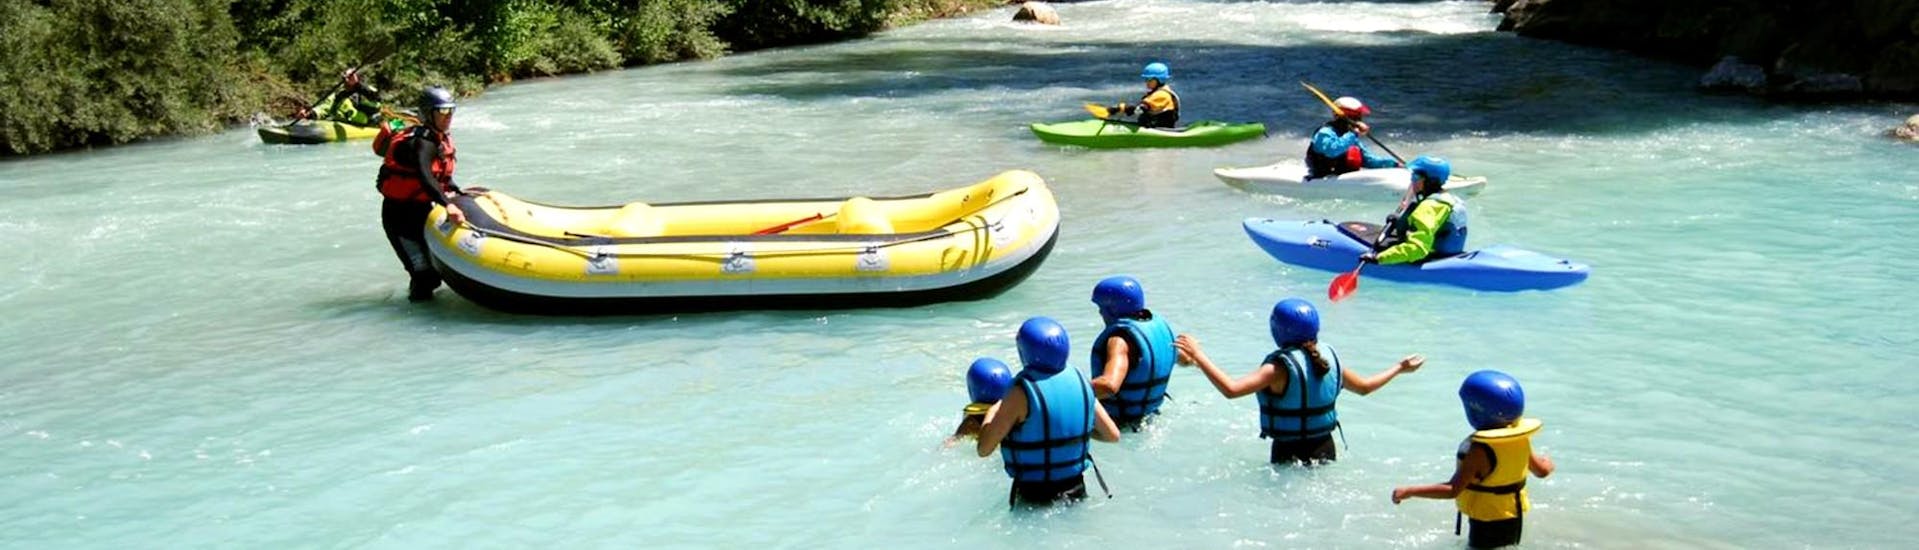 Discovery Rafting op de Guisane rivier.